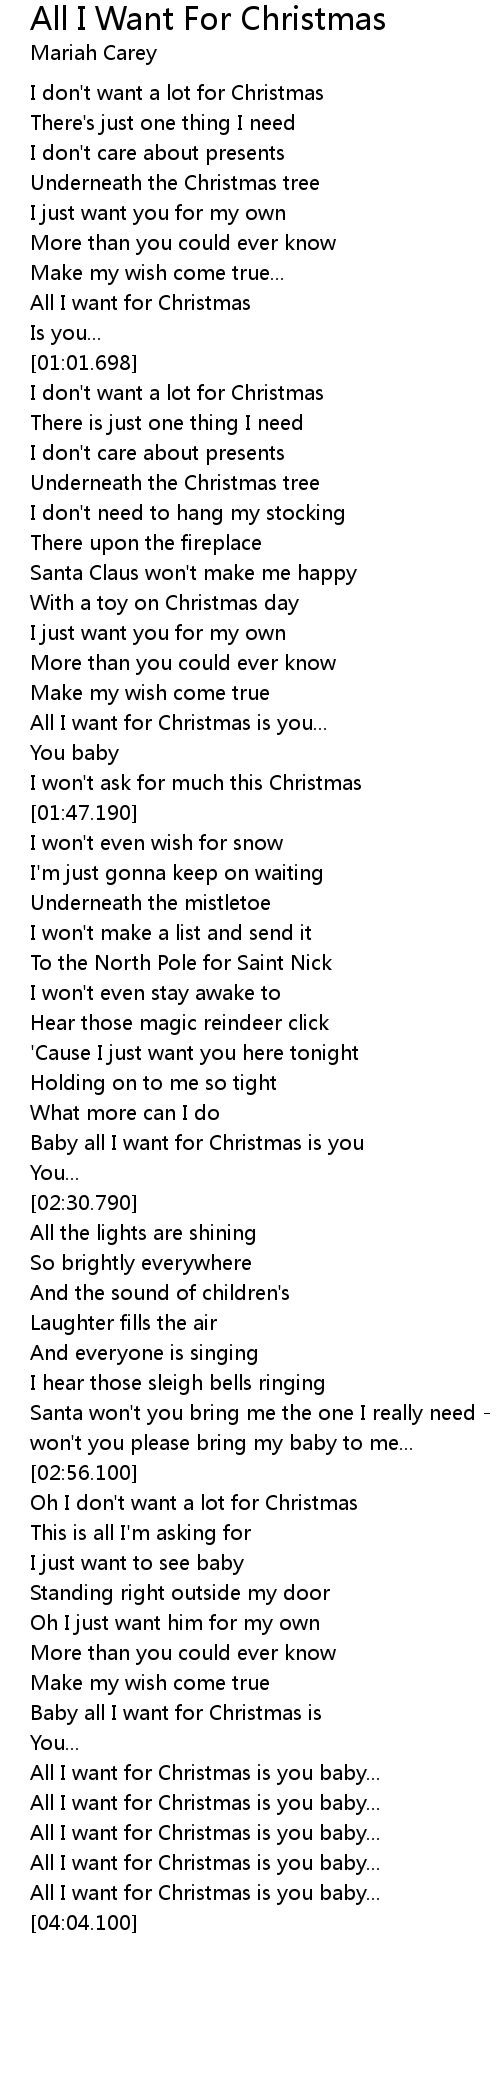 all-i-want-for-christmas-lyrics-follow-lyrics